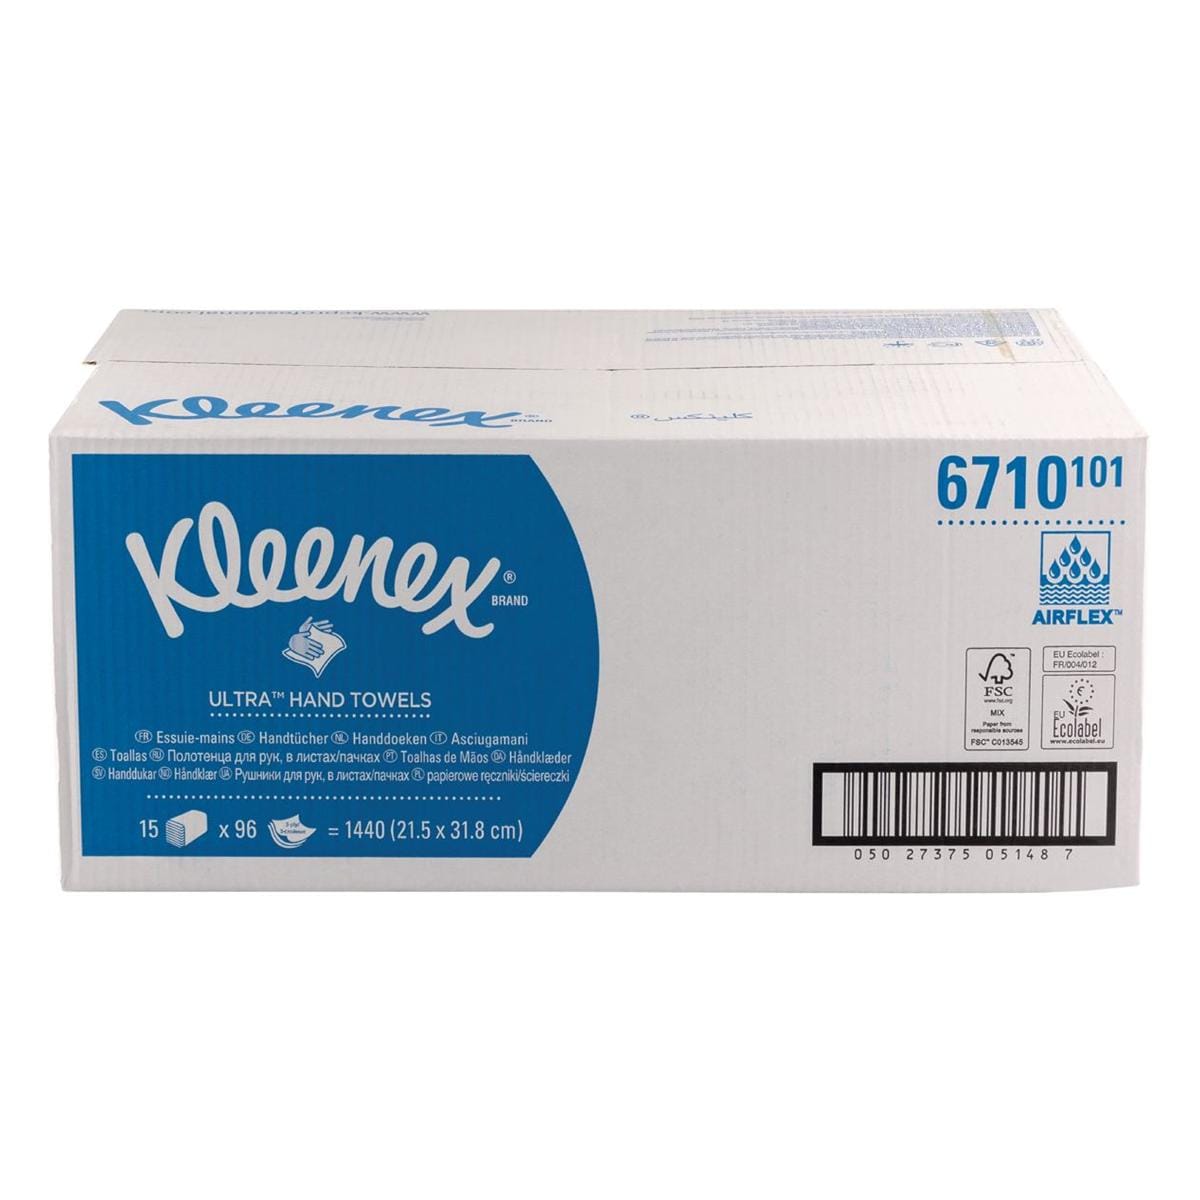 Kleenex ULTRA Hand Towel 31.5 x 21.5cm 1440pk